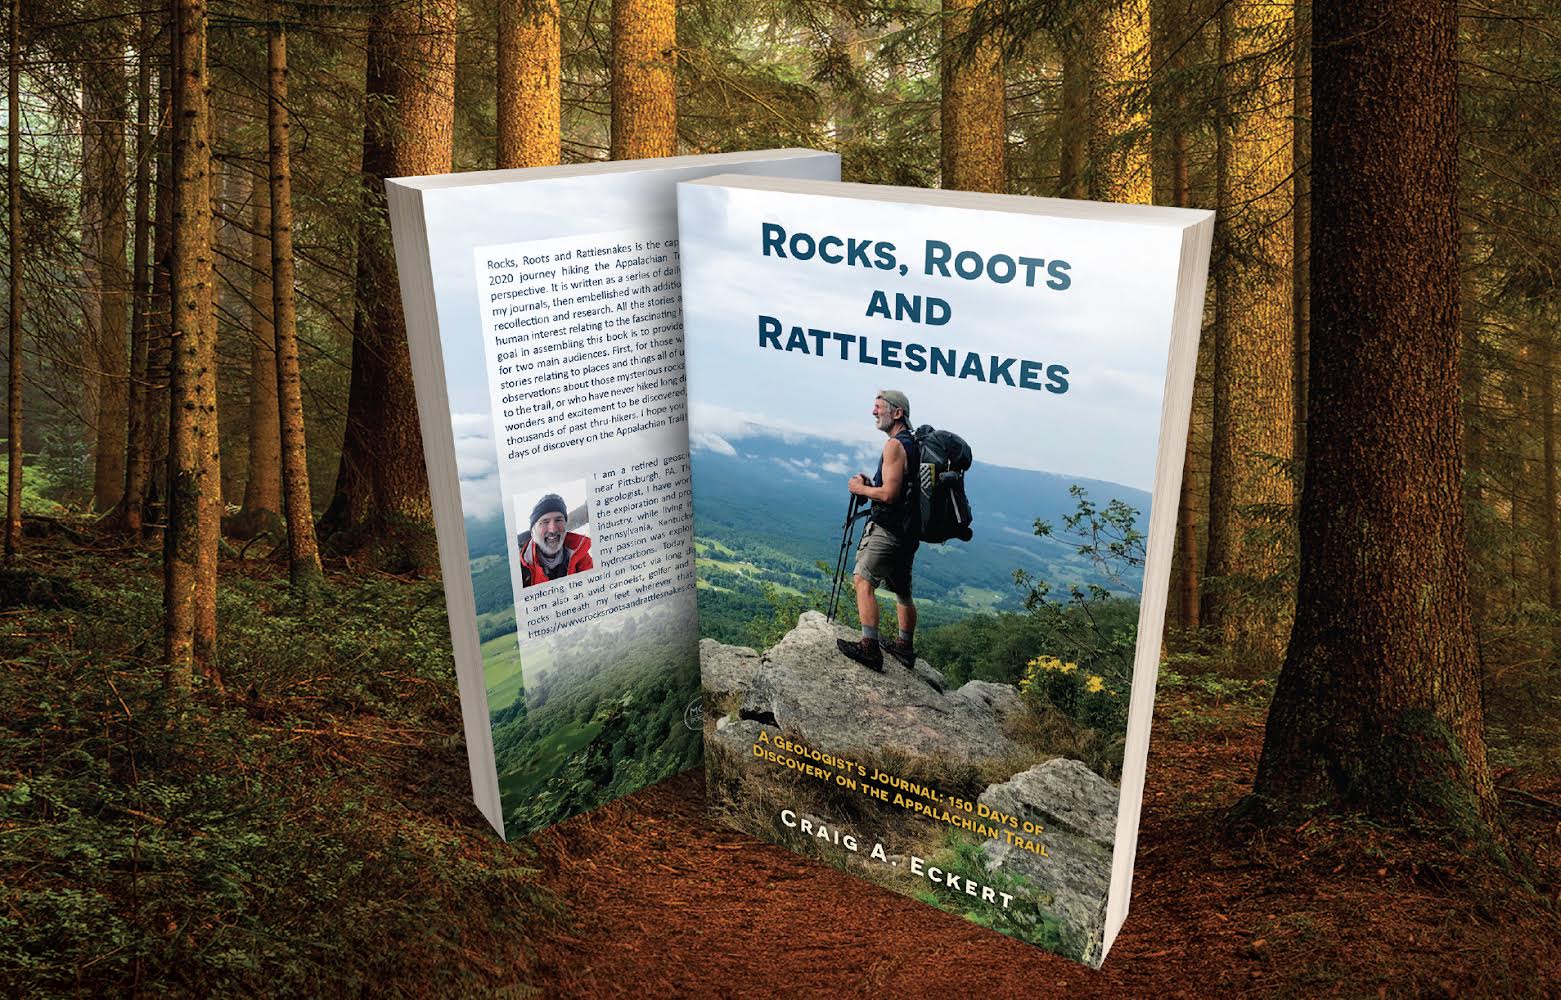 Rocks, Roots, and Rattlesnakes (Craig Eckert Books) photo